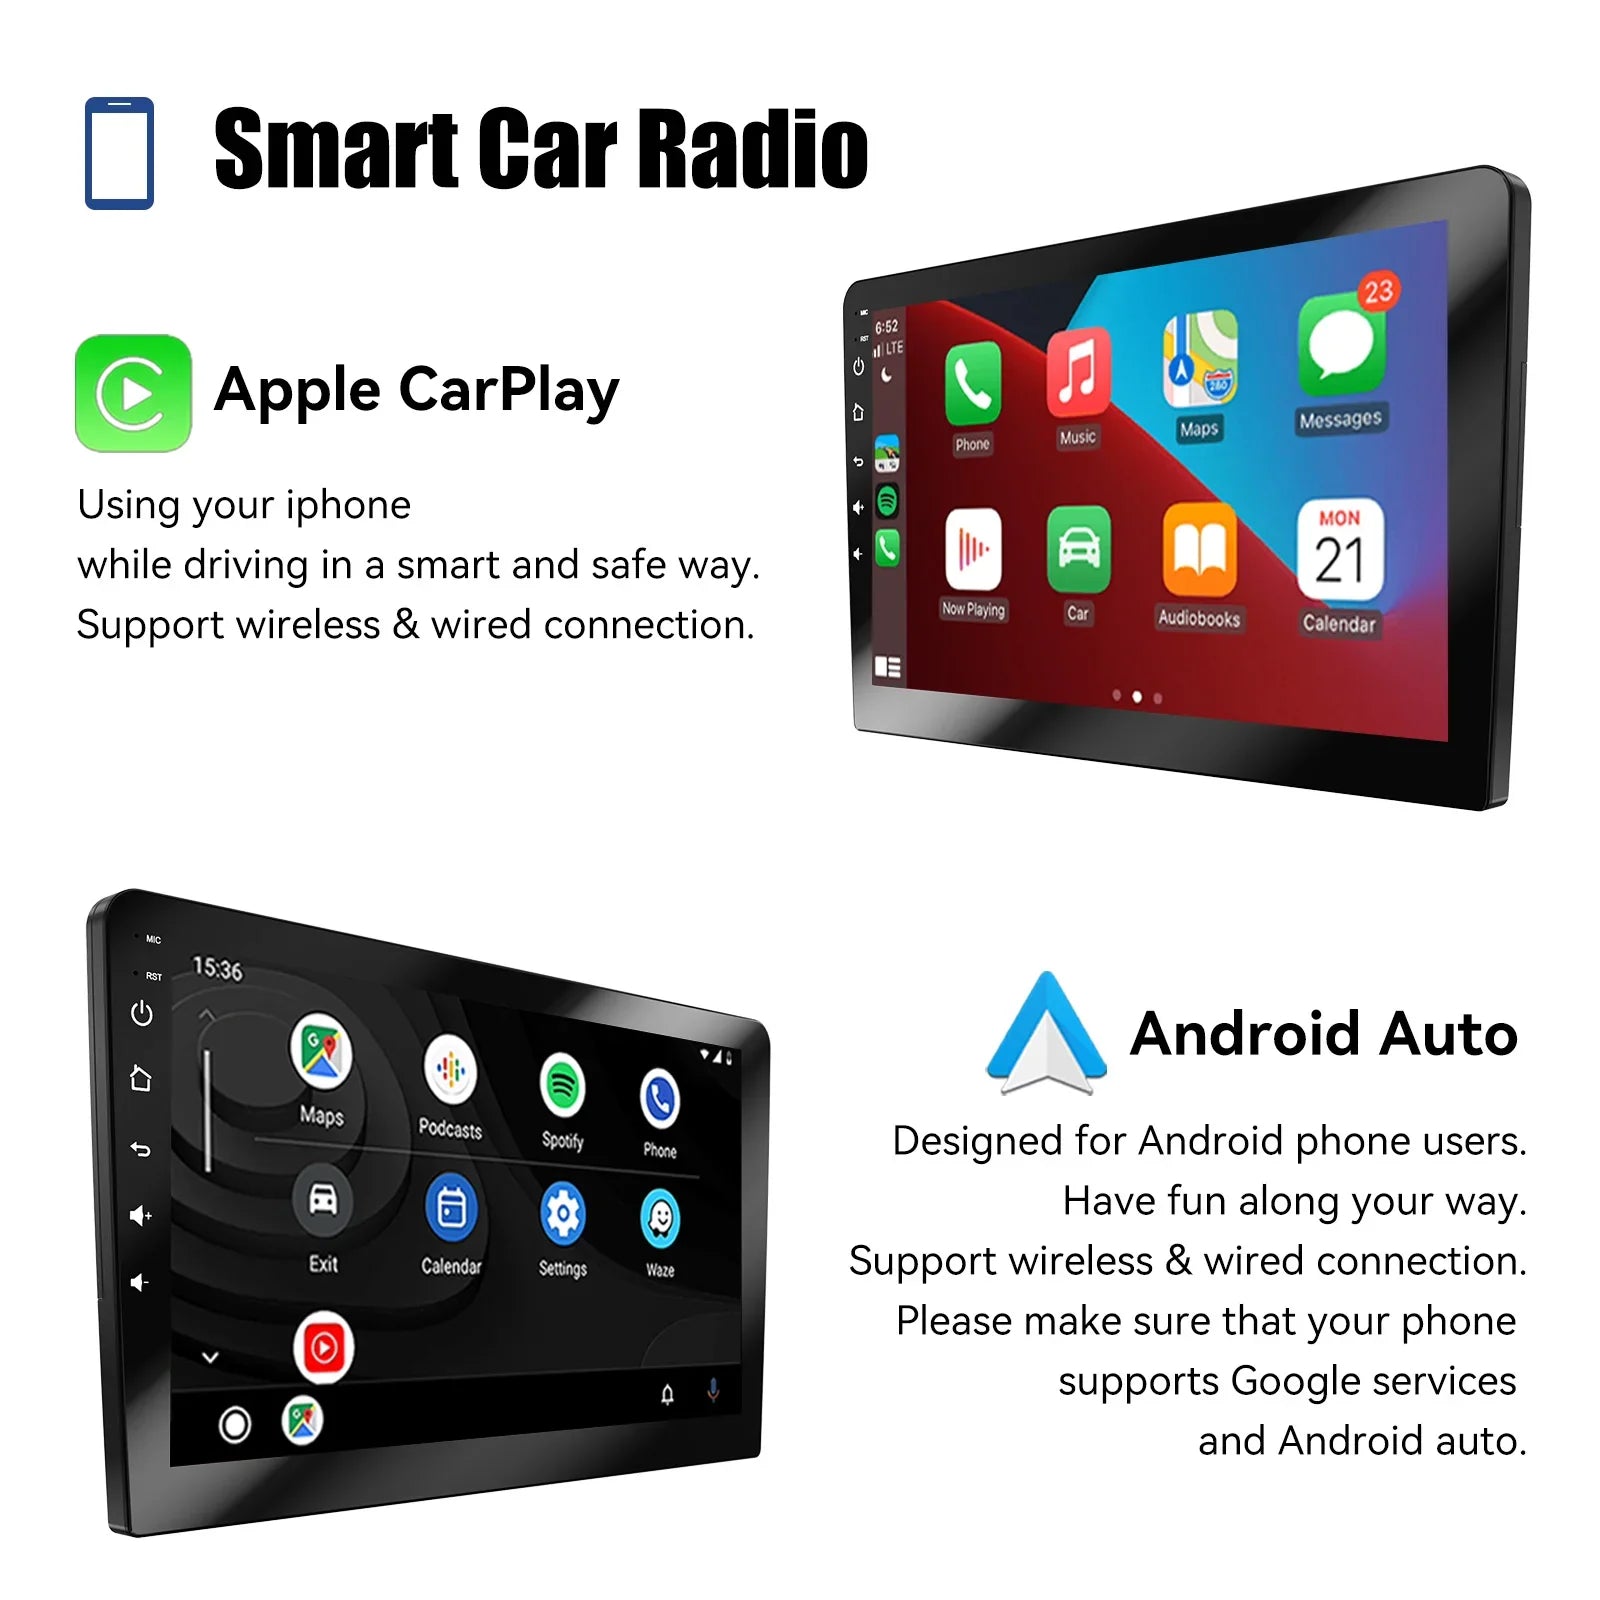 ESSGOO Car Radio Multimedia Player: Enhanced Connectivity & Advanced Features  ourlum.com   